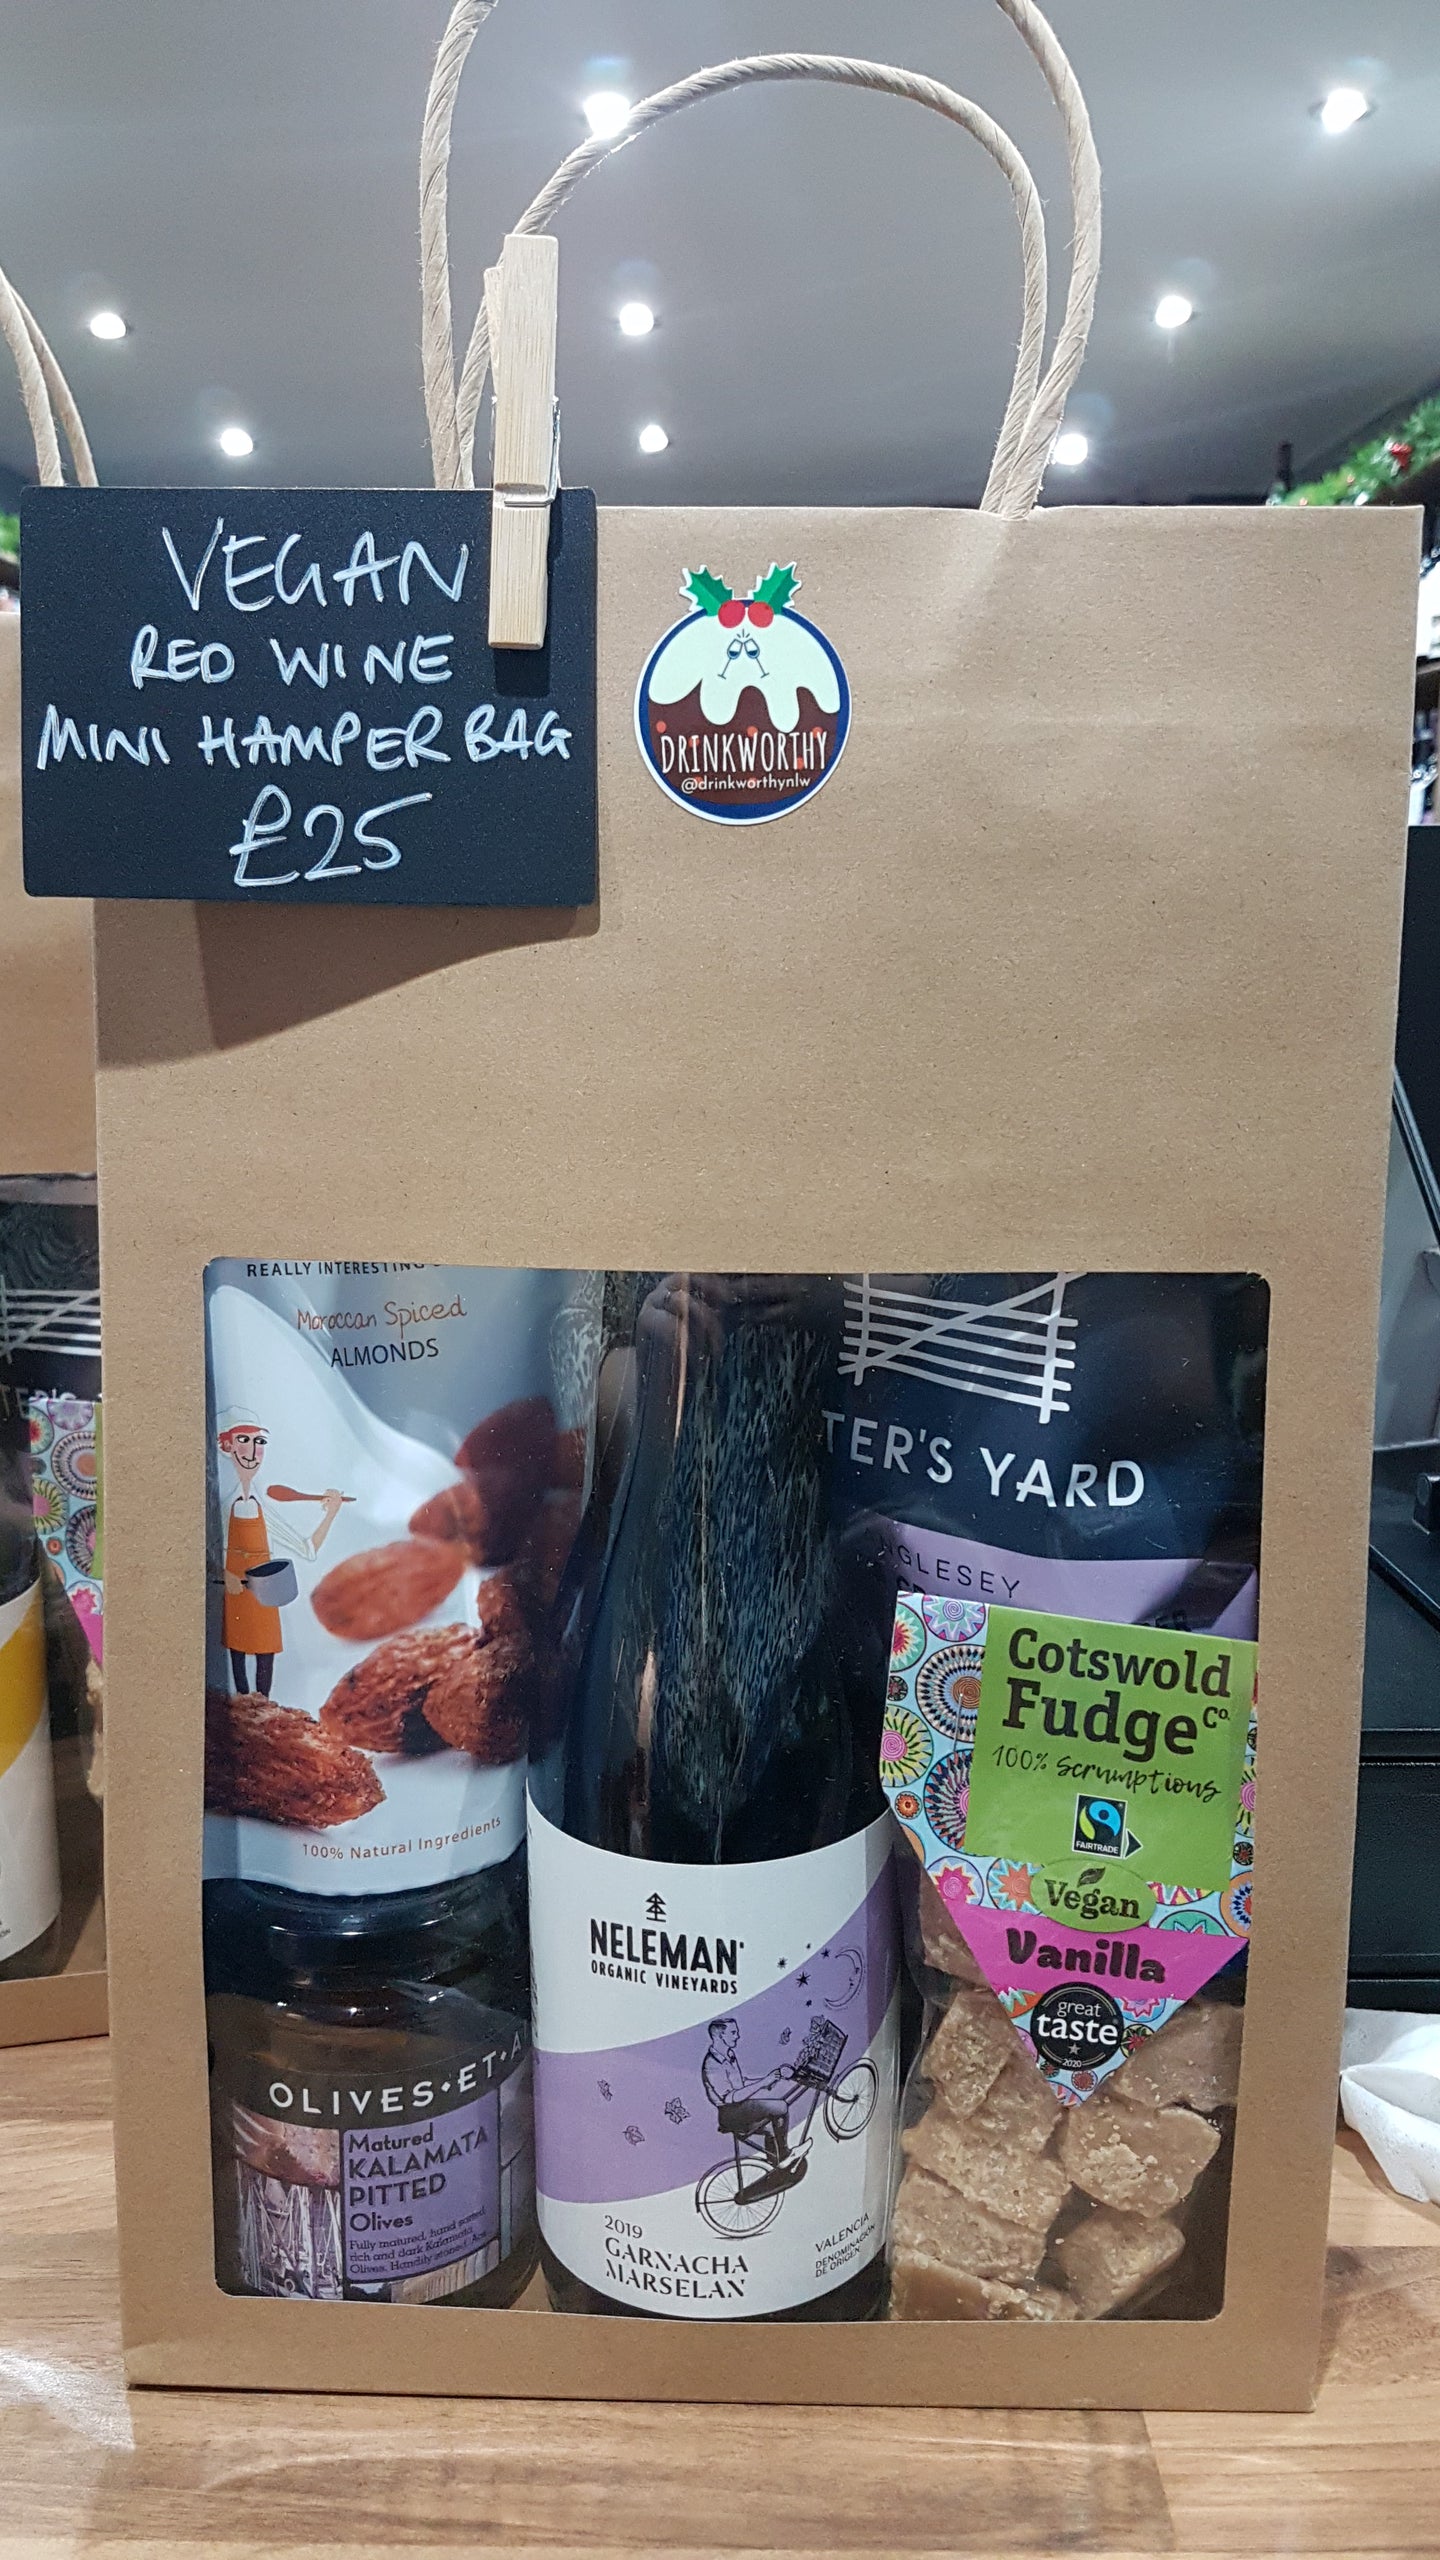 Vegan Red Wine Collection Bag